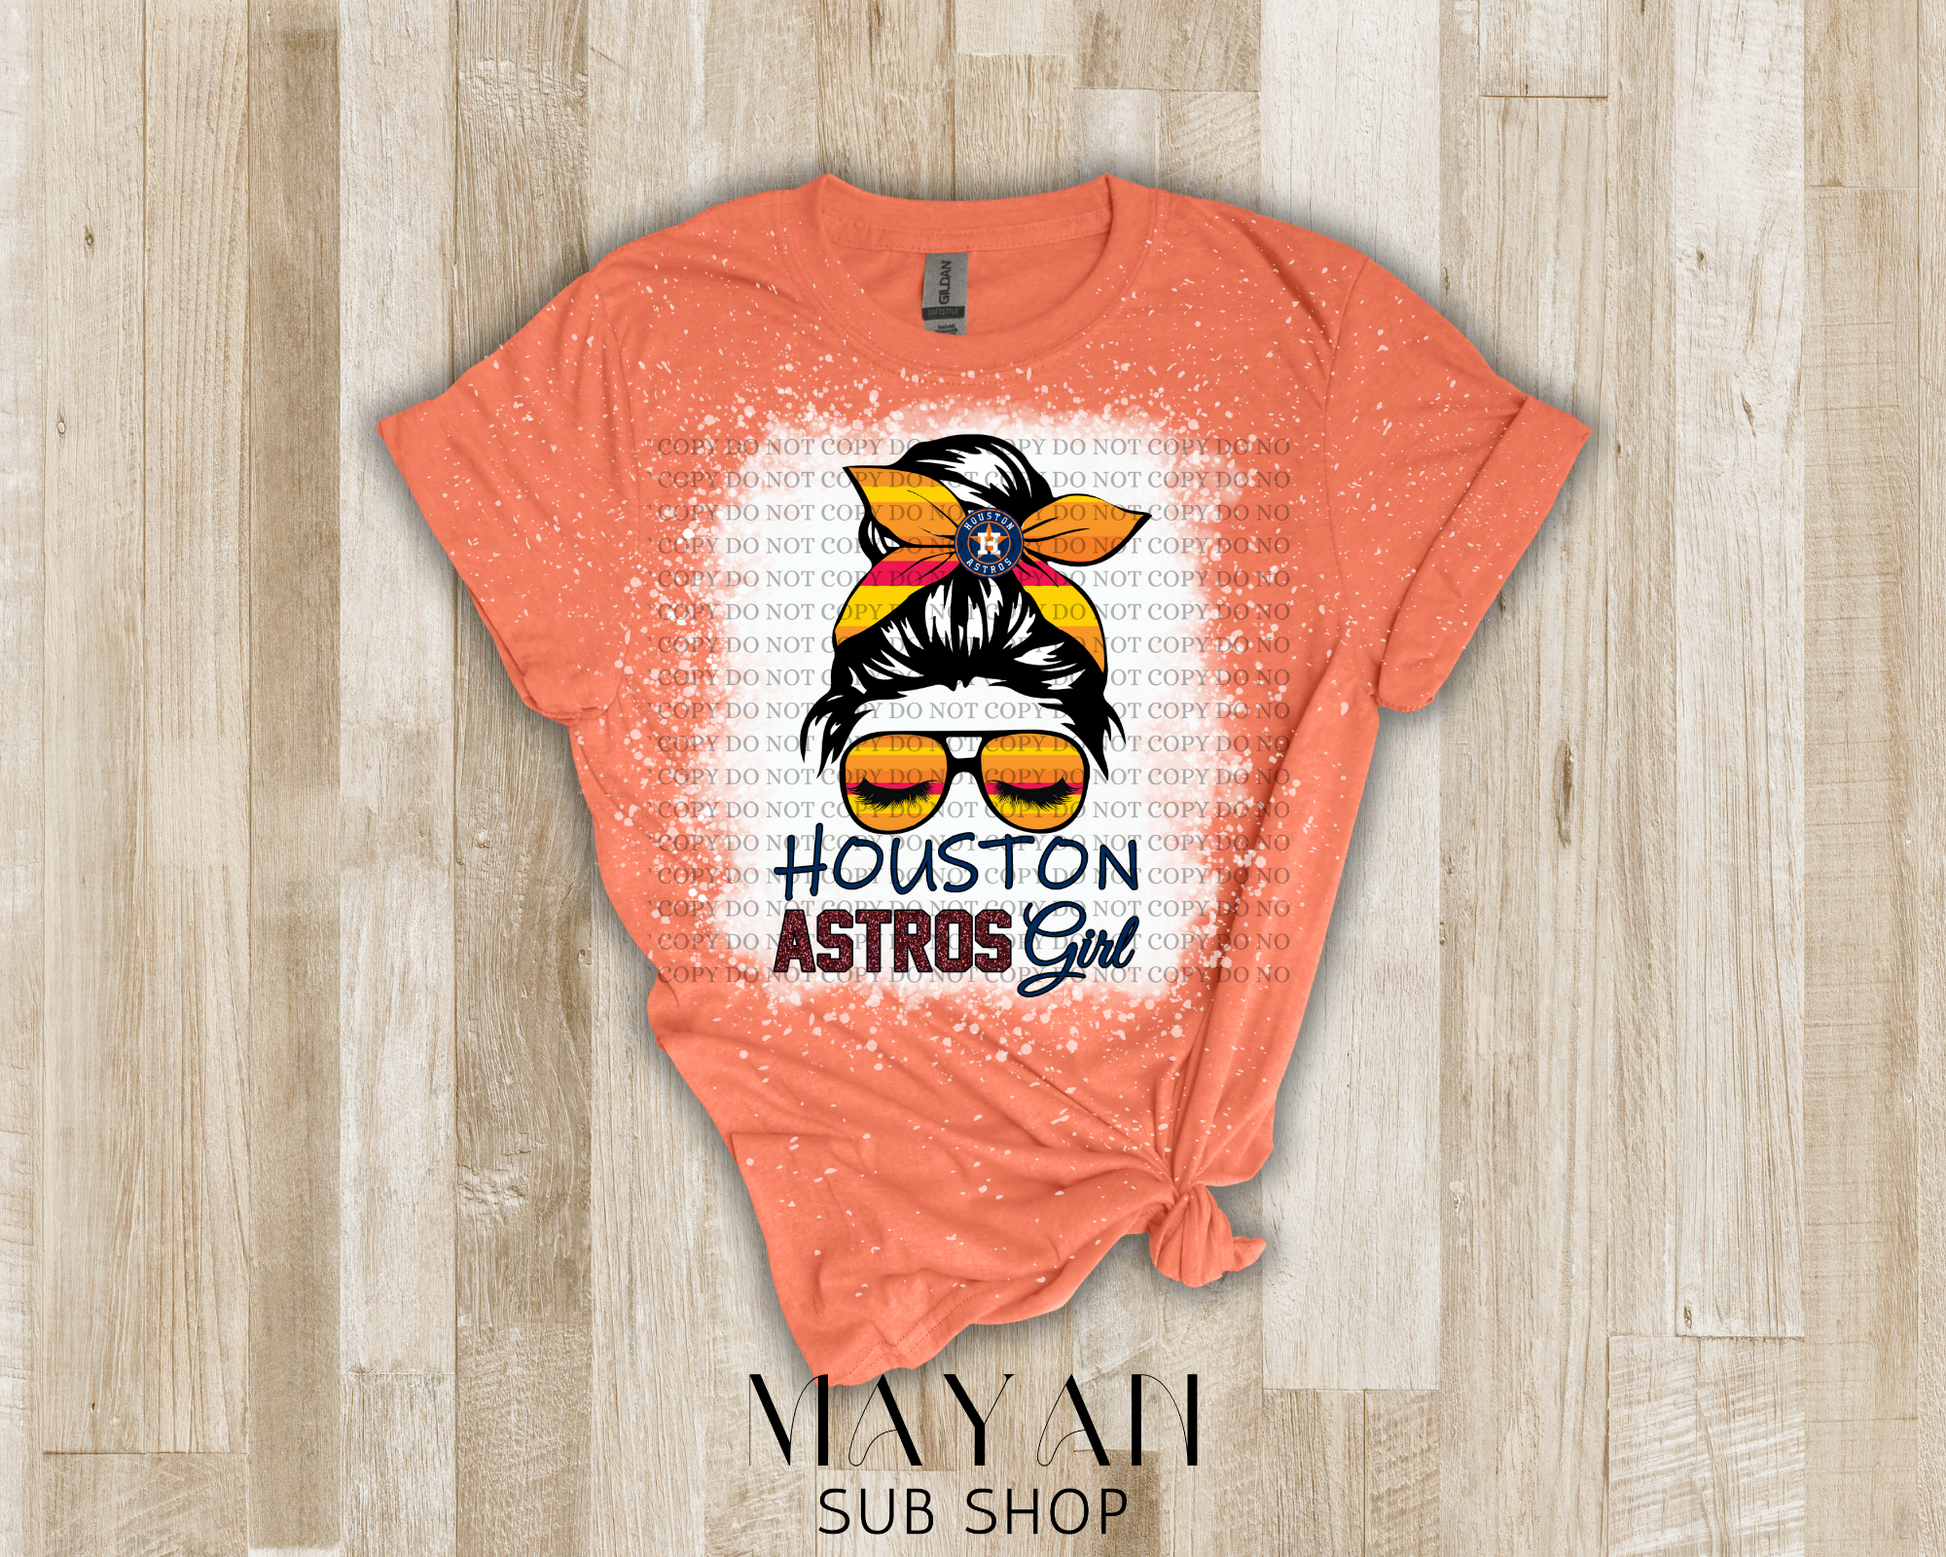 Astros Girl Messy Bun Bleached Shirt - Mayan Sub Shop